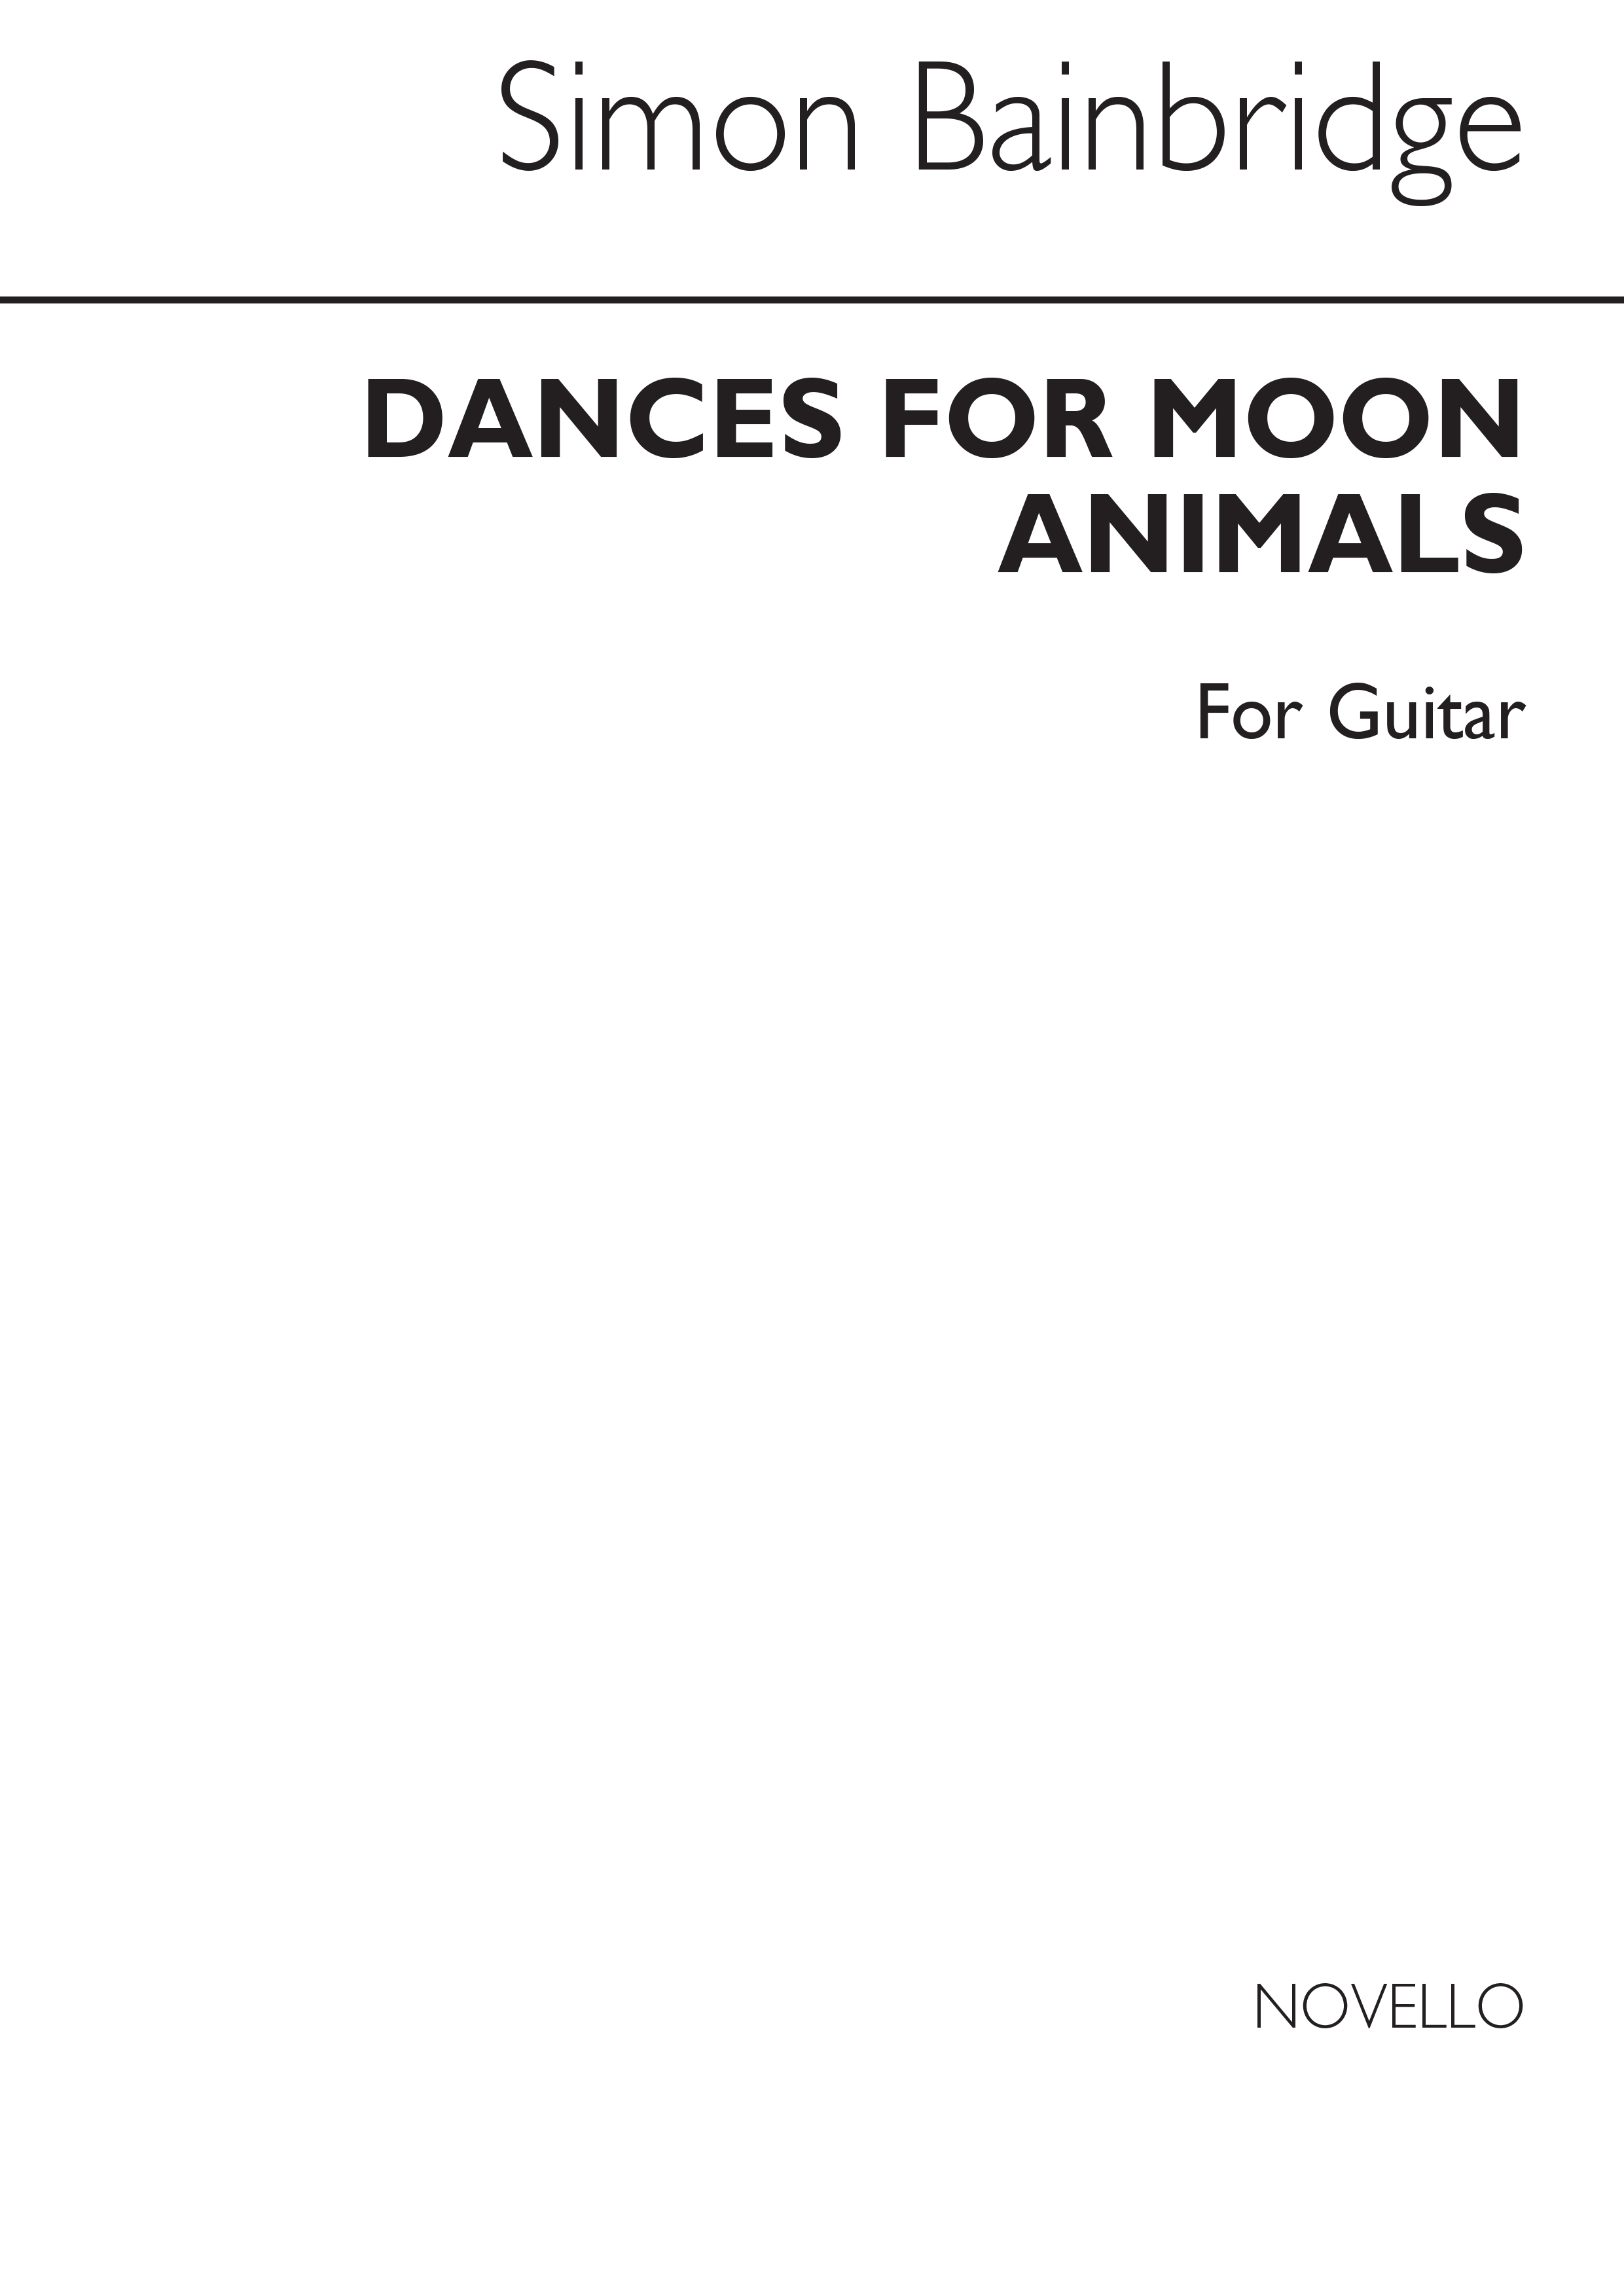 Simon Bainbridge: Dances For Moon Animals